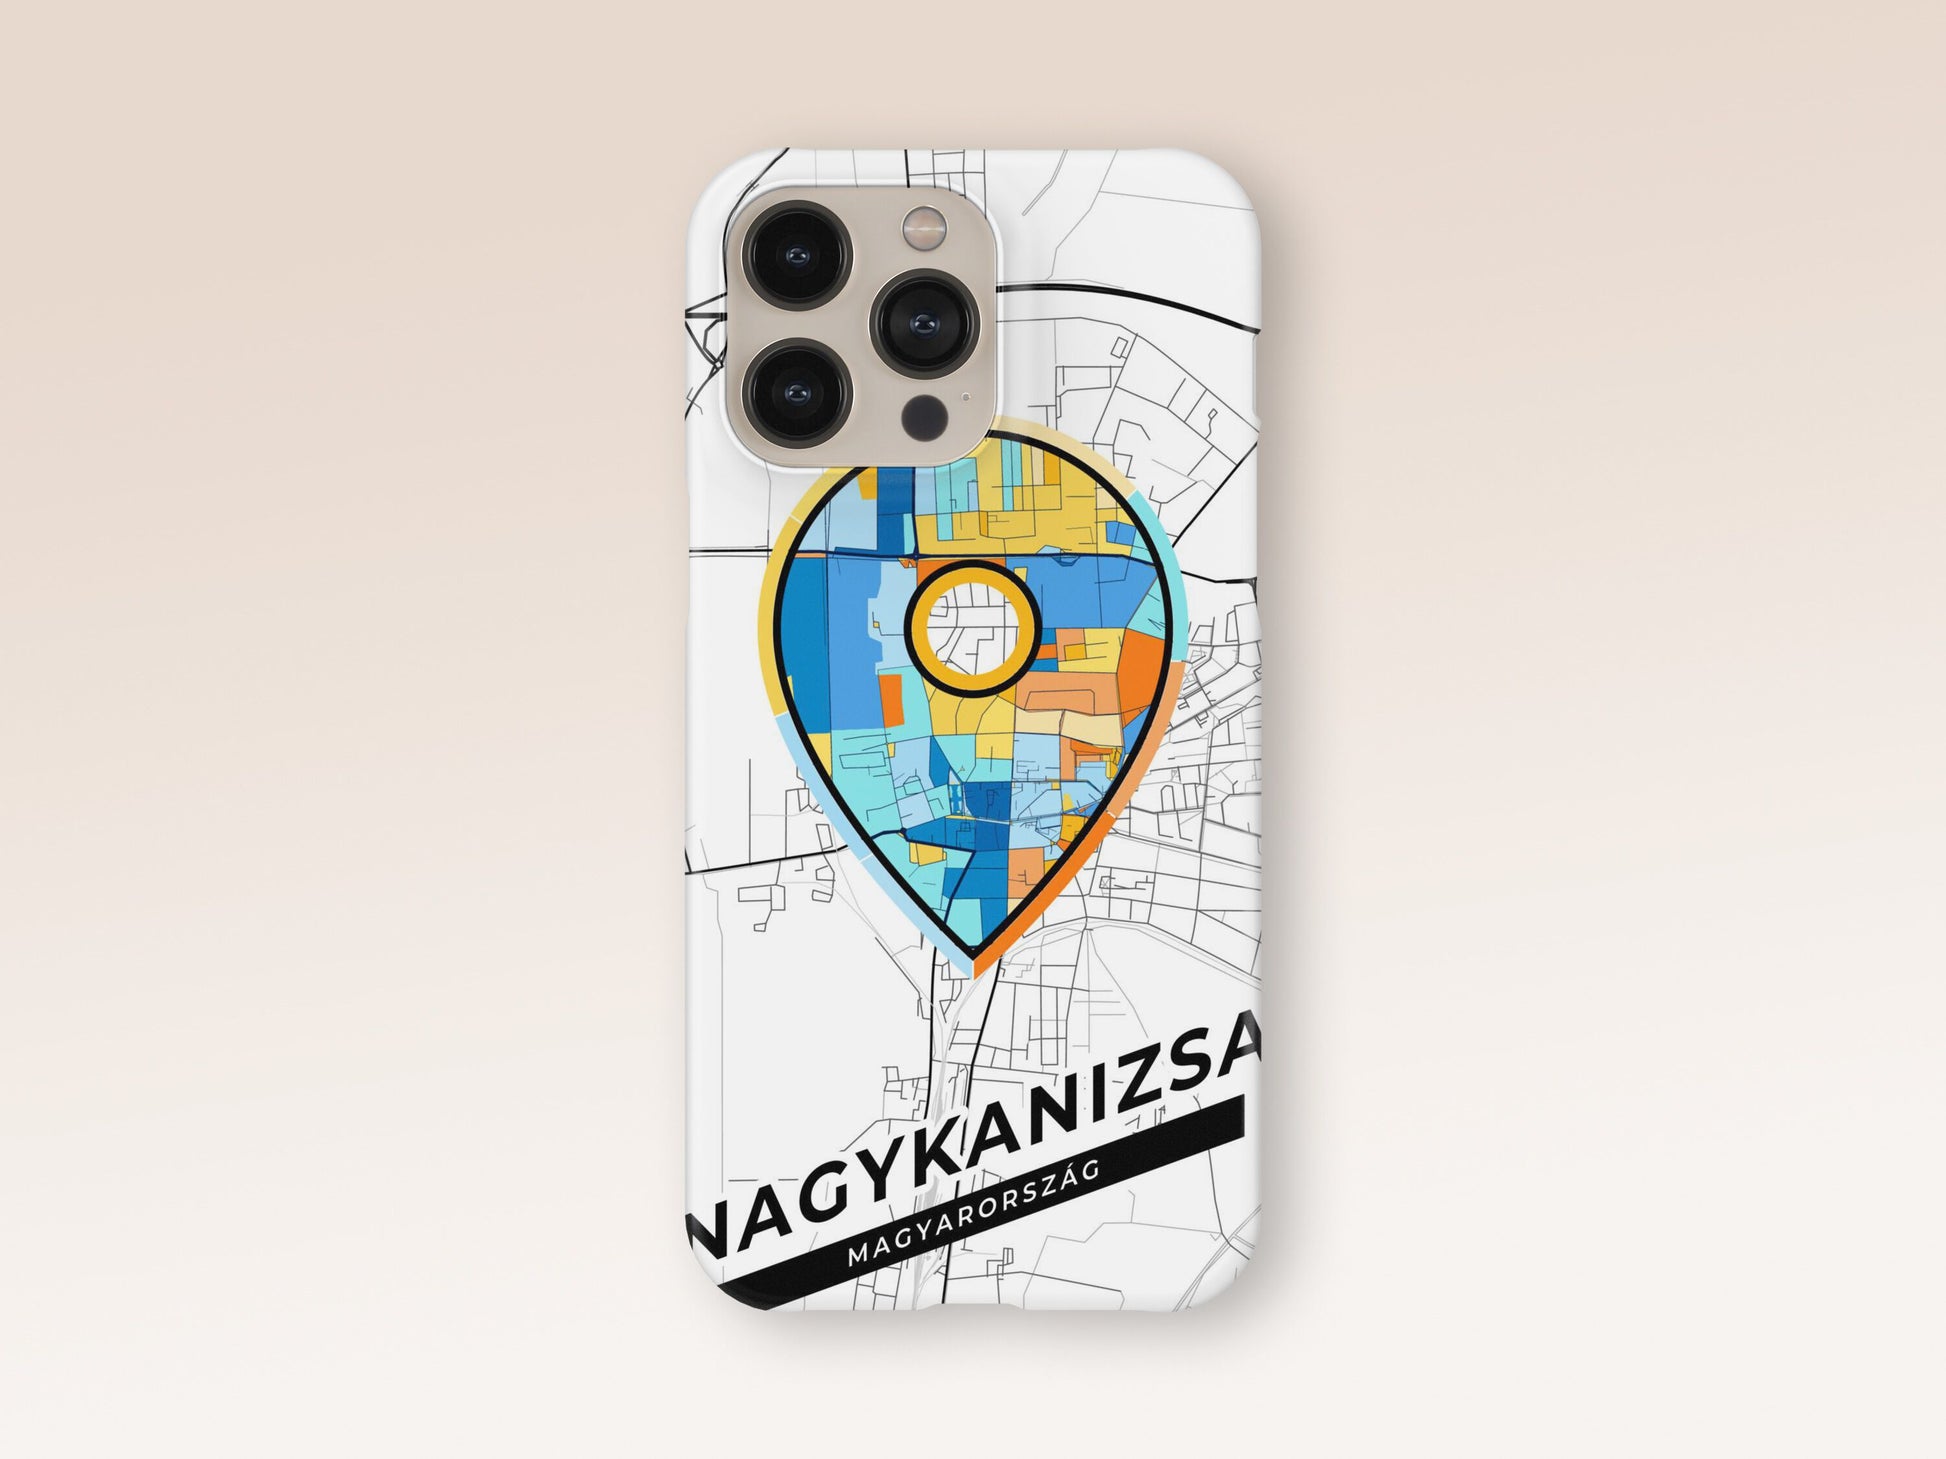 Nagykanizsa Hungary slim phone case with colorful icon. Birthday, wedding or housewarming gift. Couple match cases. 1